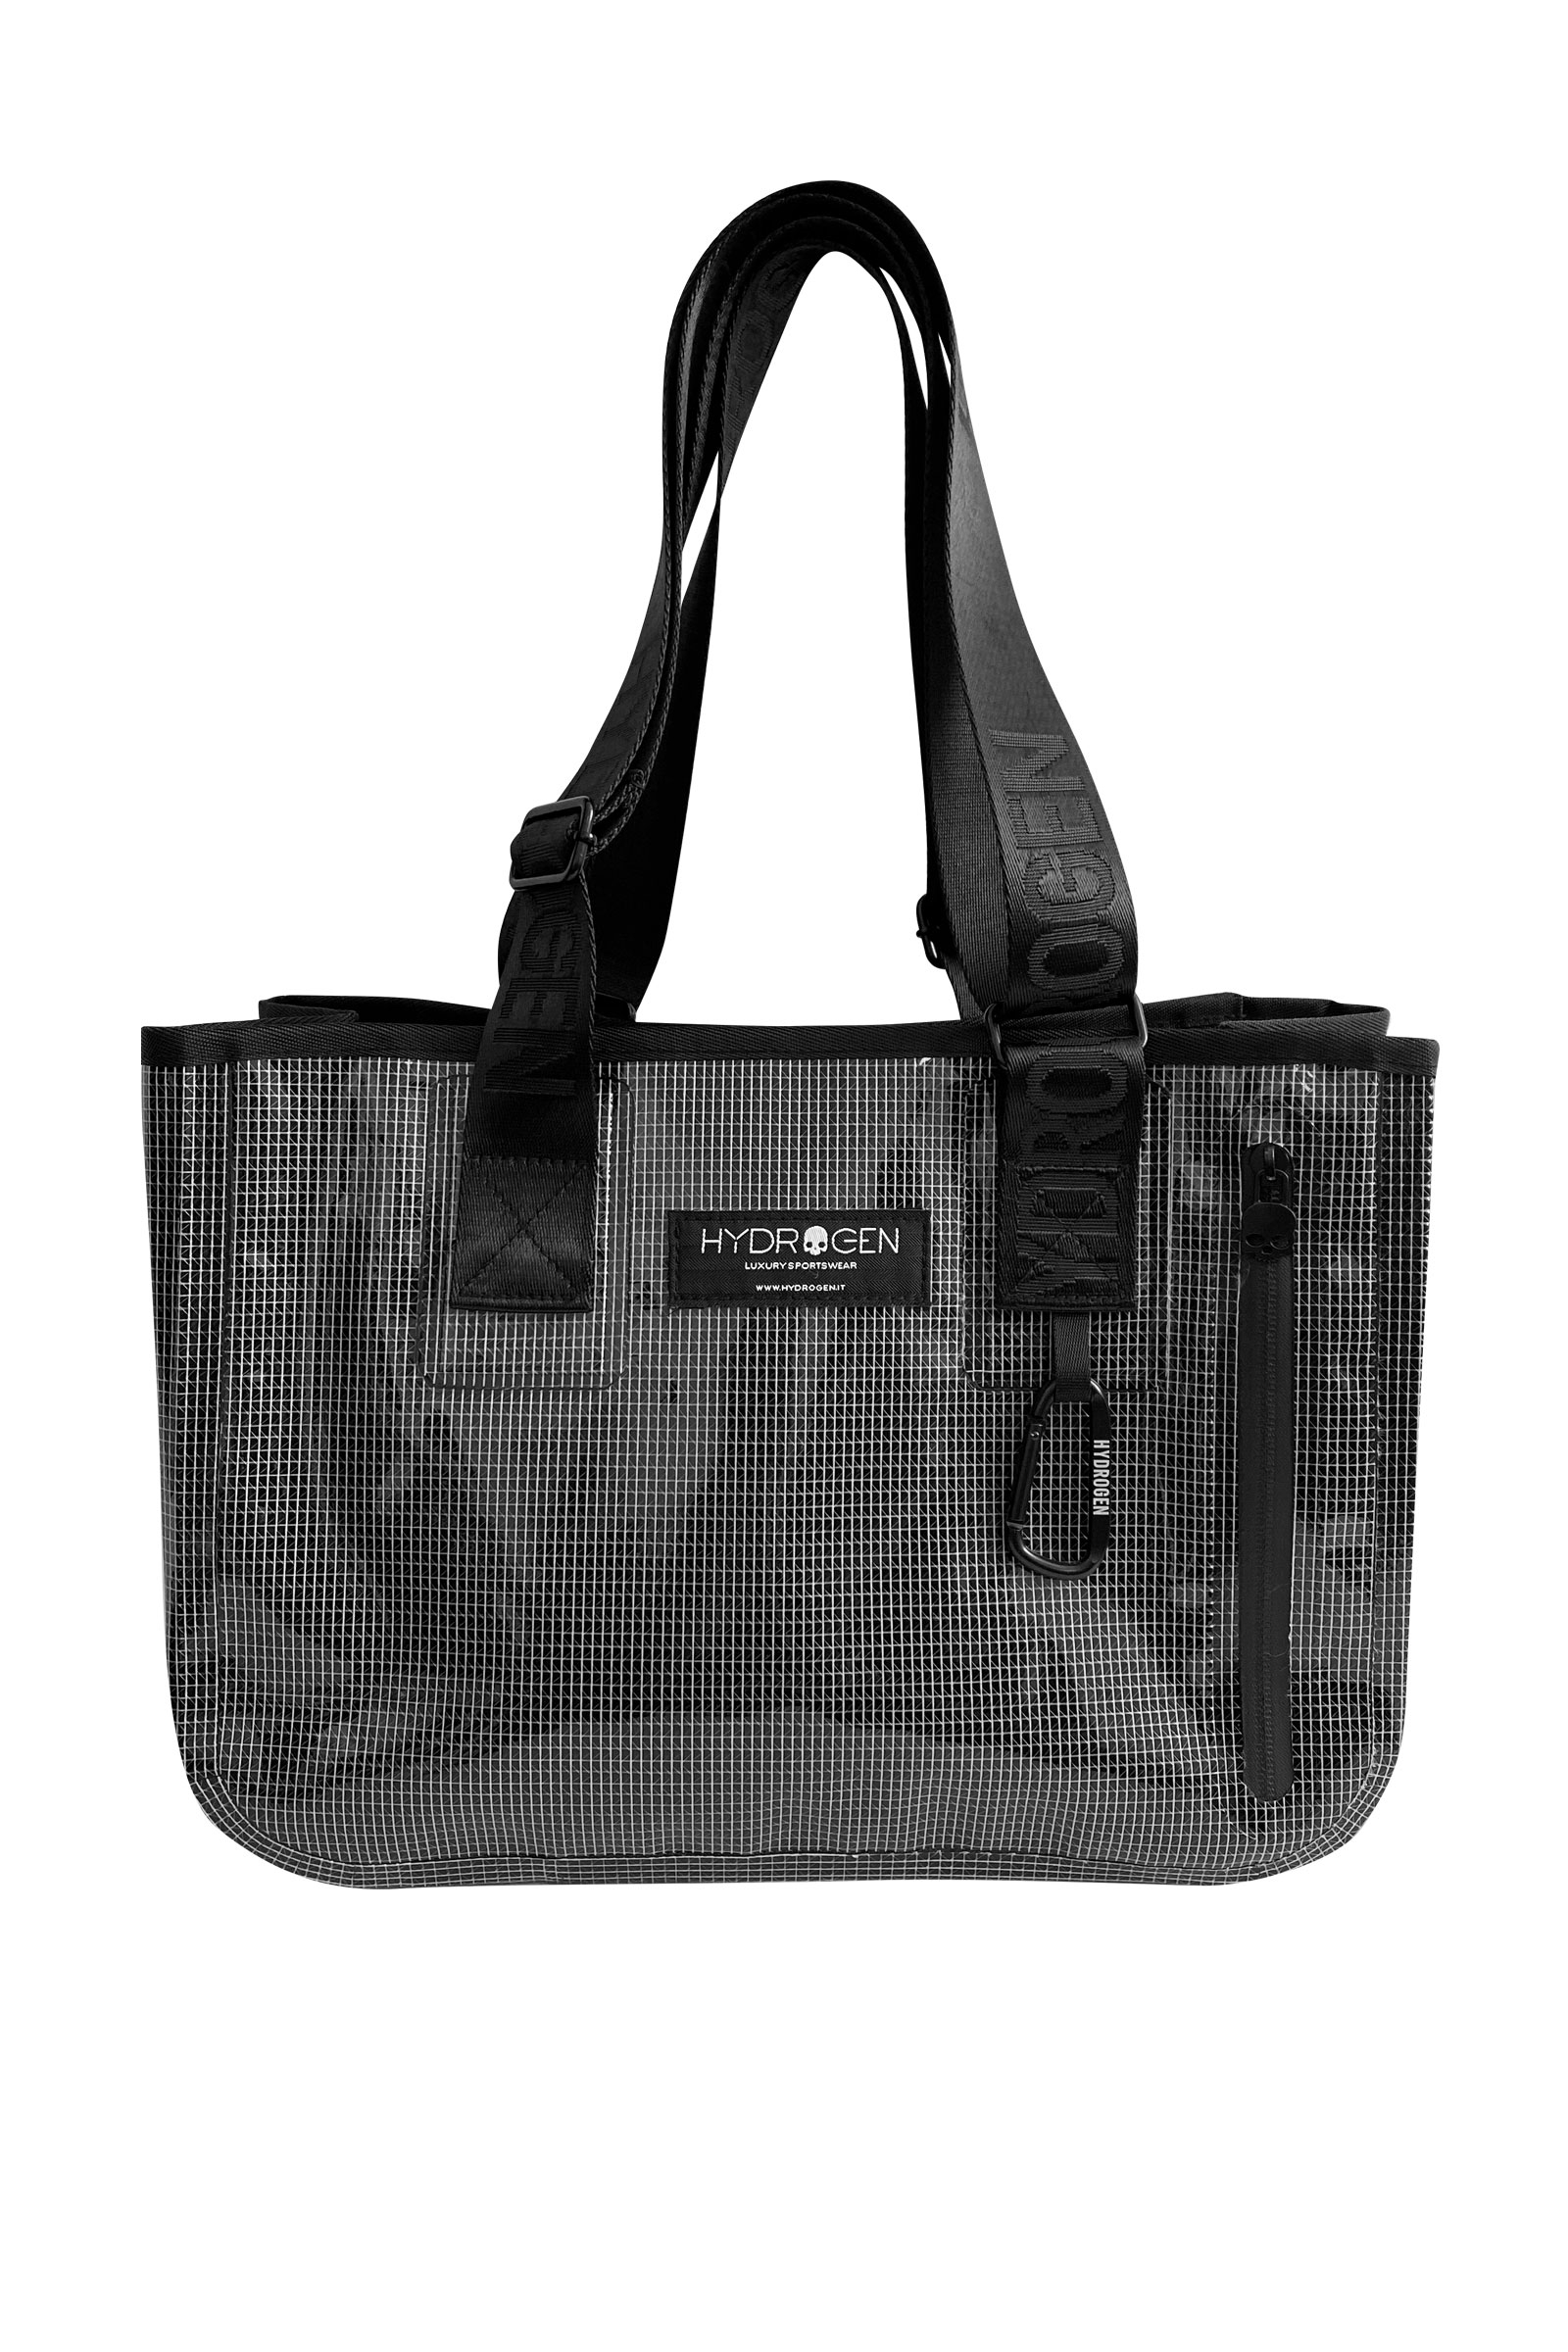 SHOPPING BAG - Accessories - Outlet Hydrogen - Luxury Sportwear